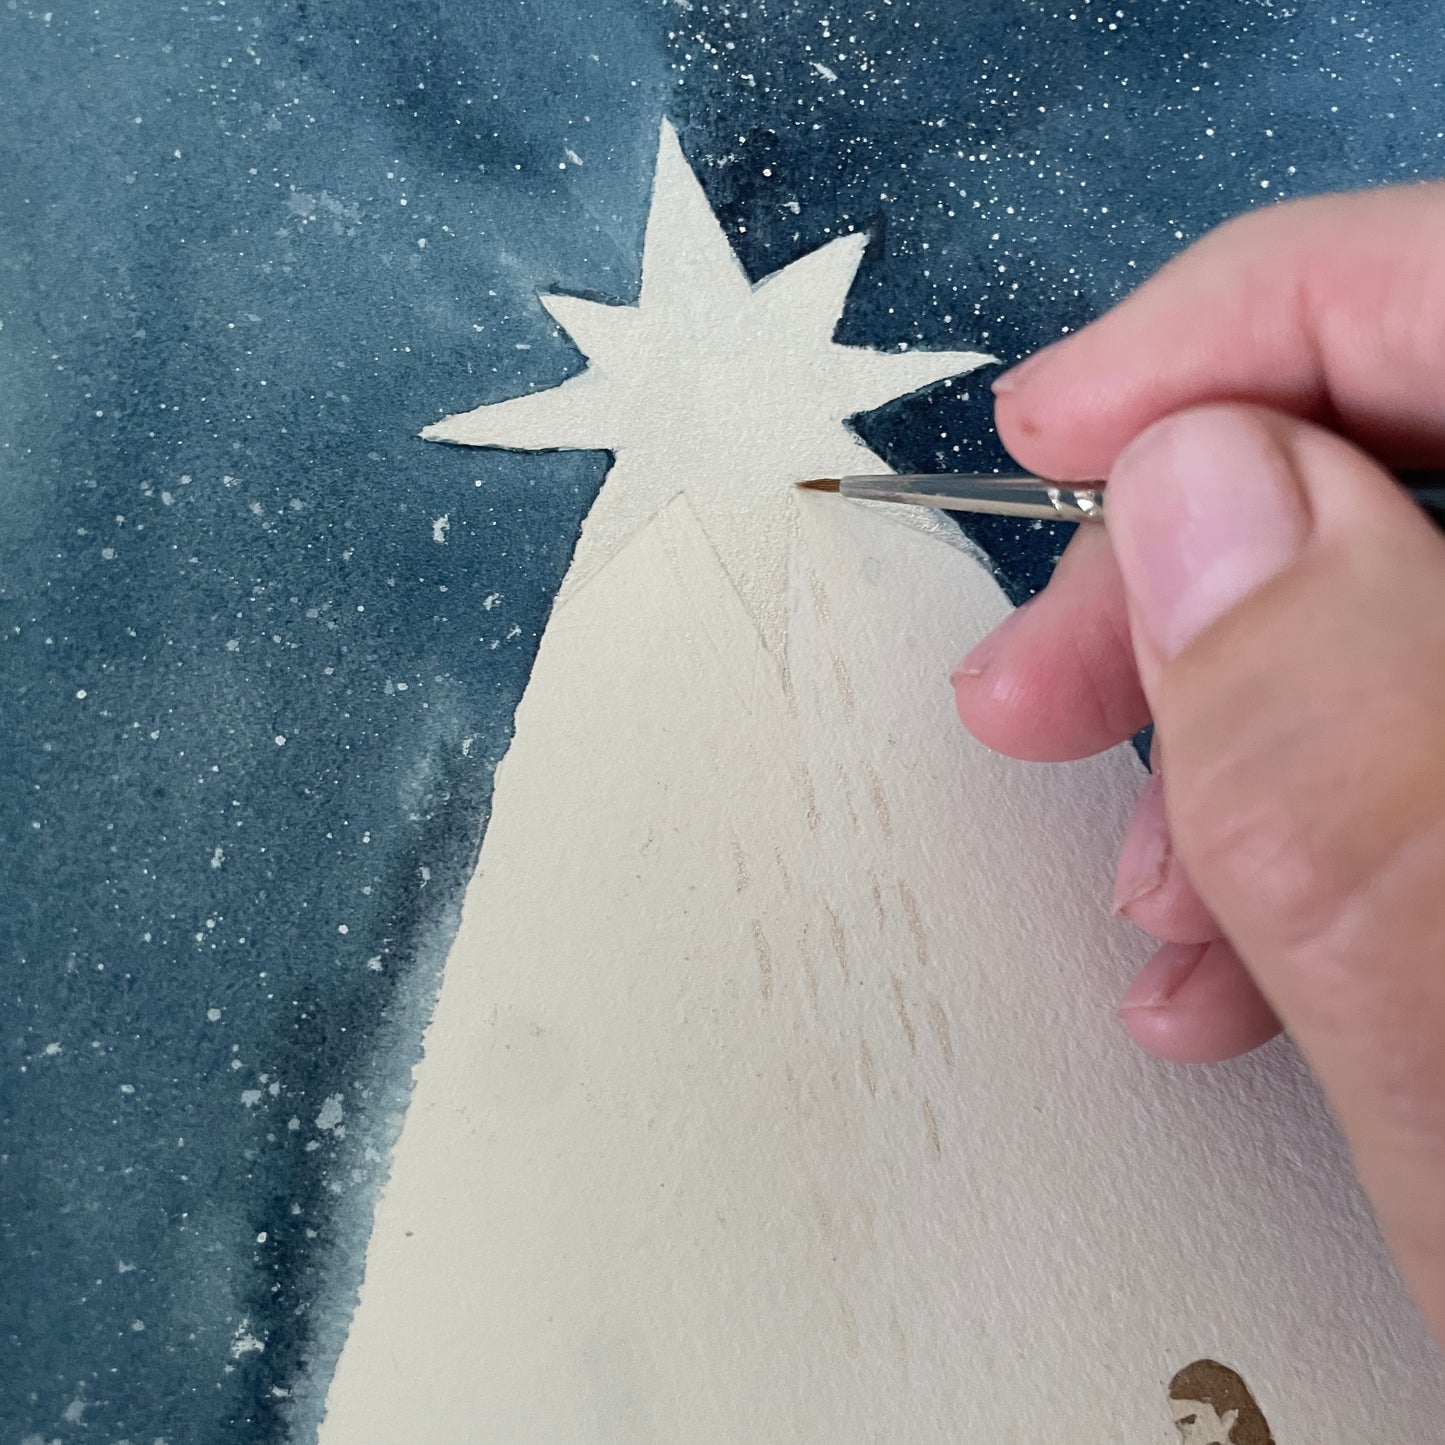 Starry Night Nativity Notecards